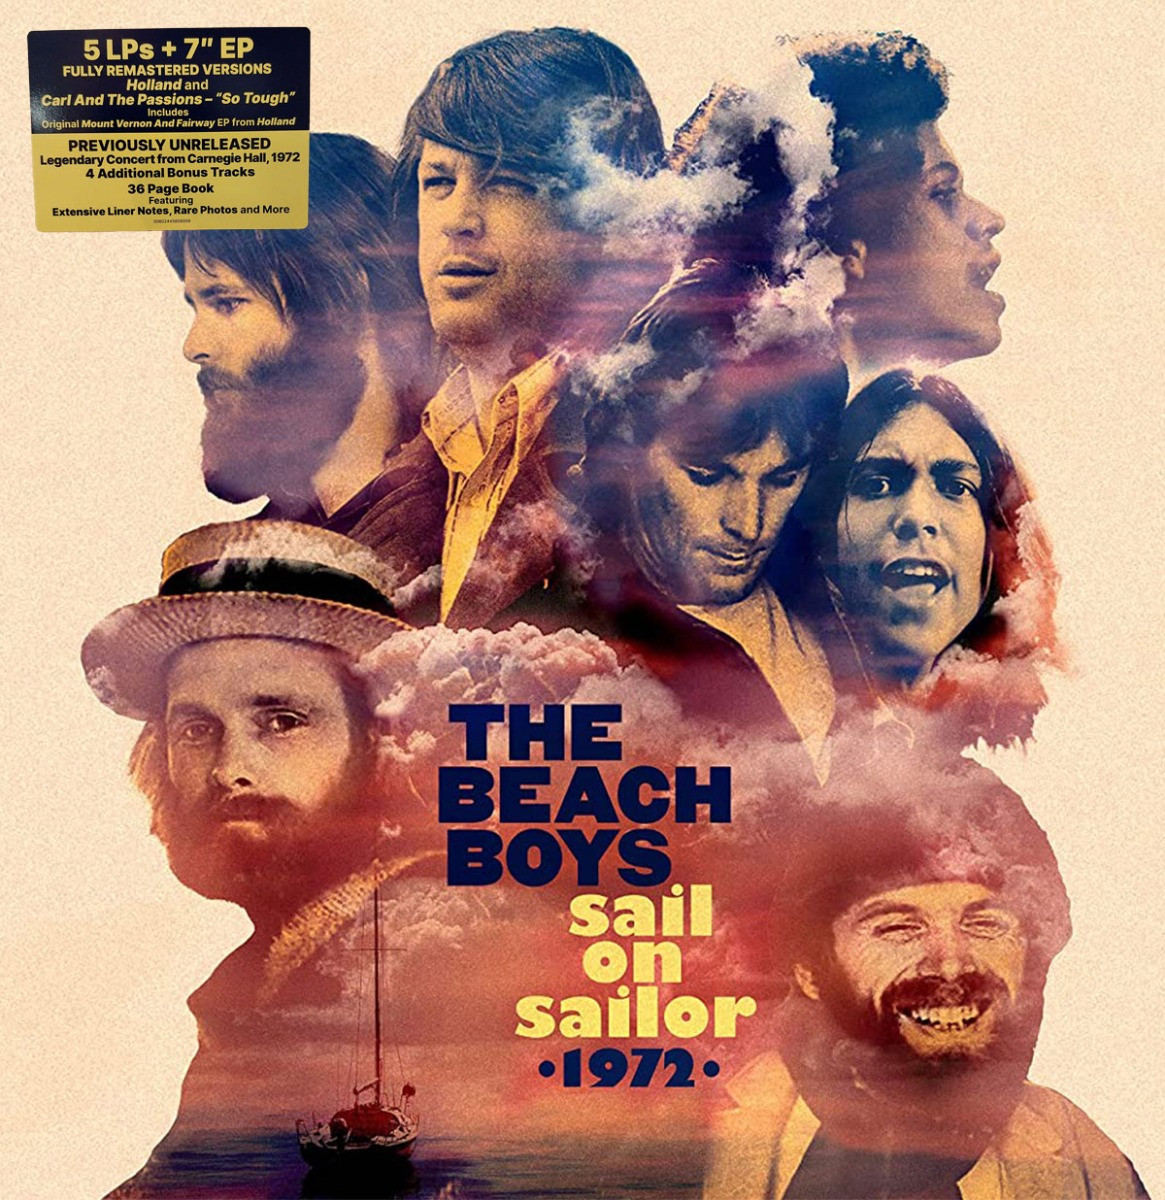 The Beach Boys - Sail On Sailor •1972• 5LP + 7"EP Boxset